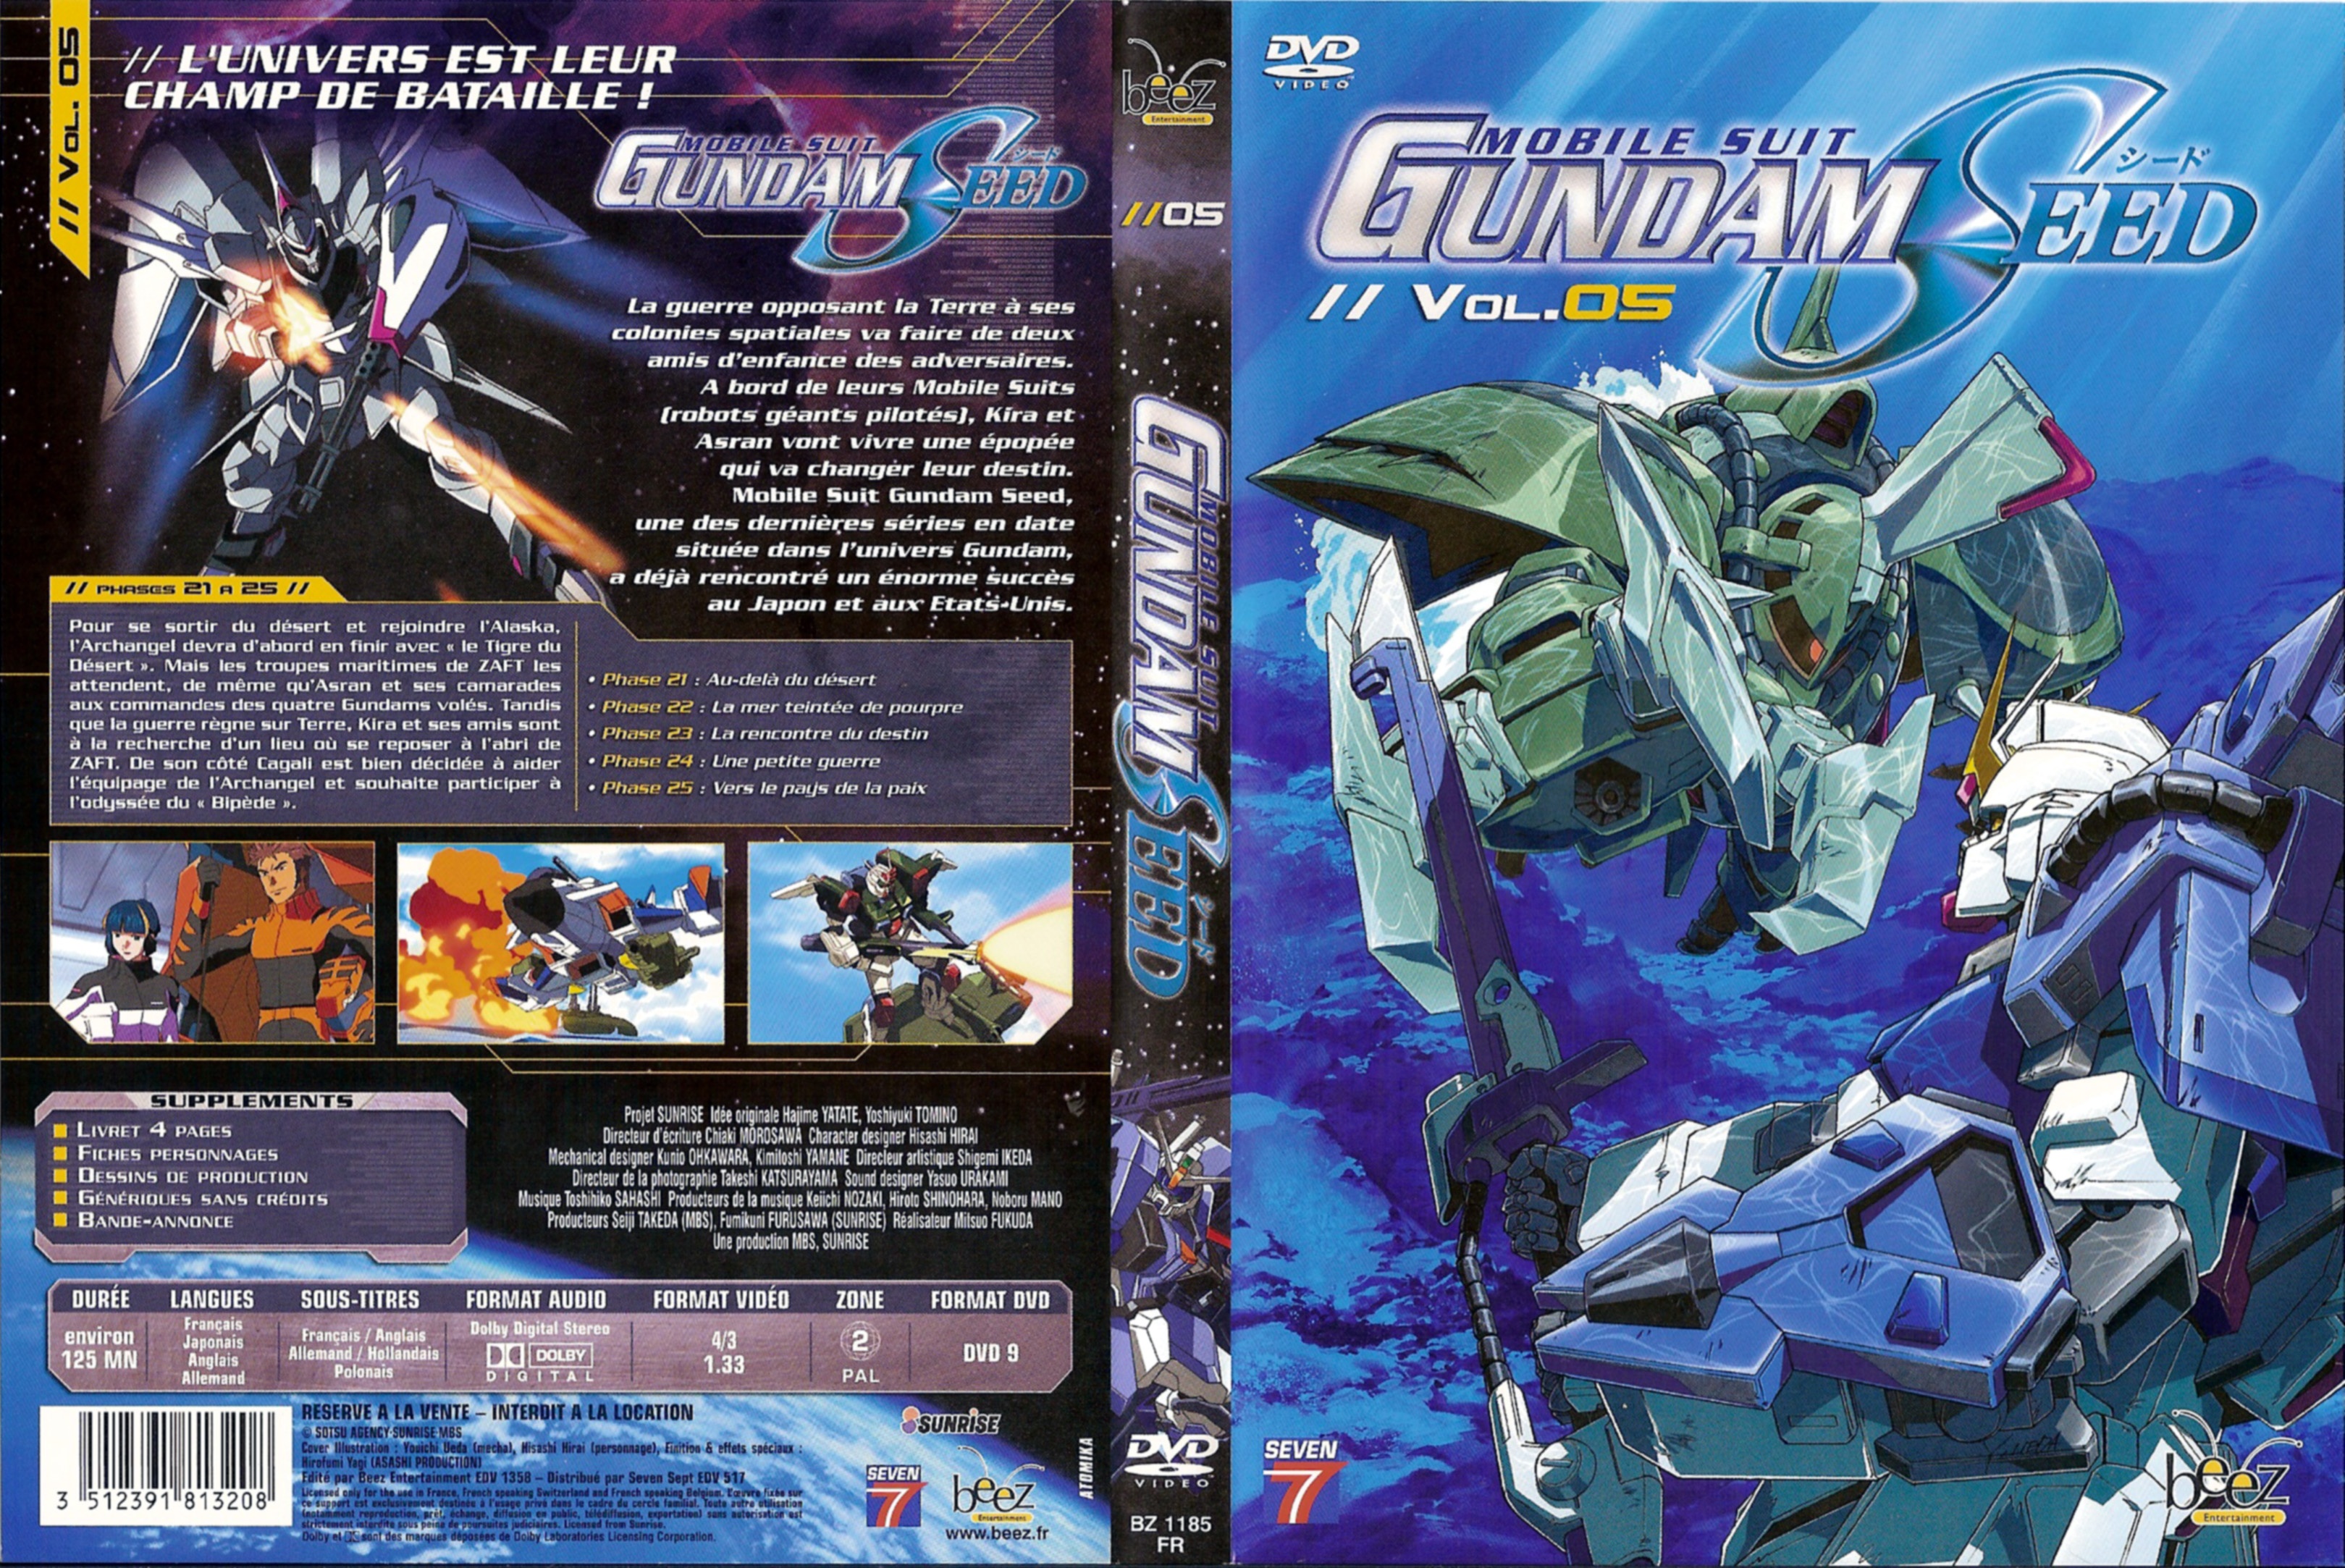 Jaquette DVD Gundam seed vol 05